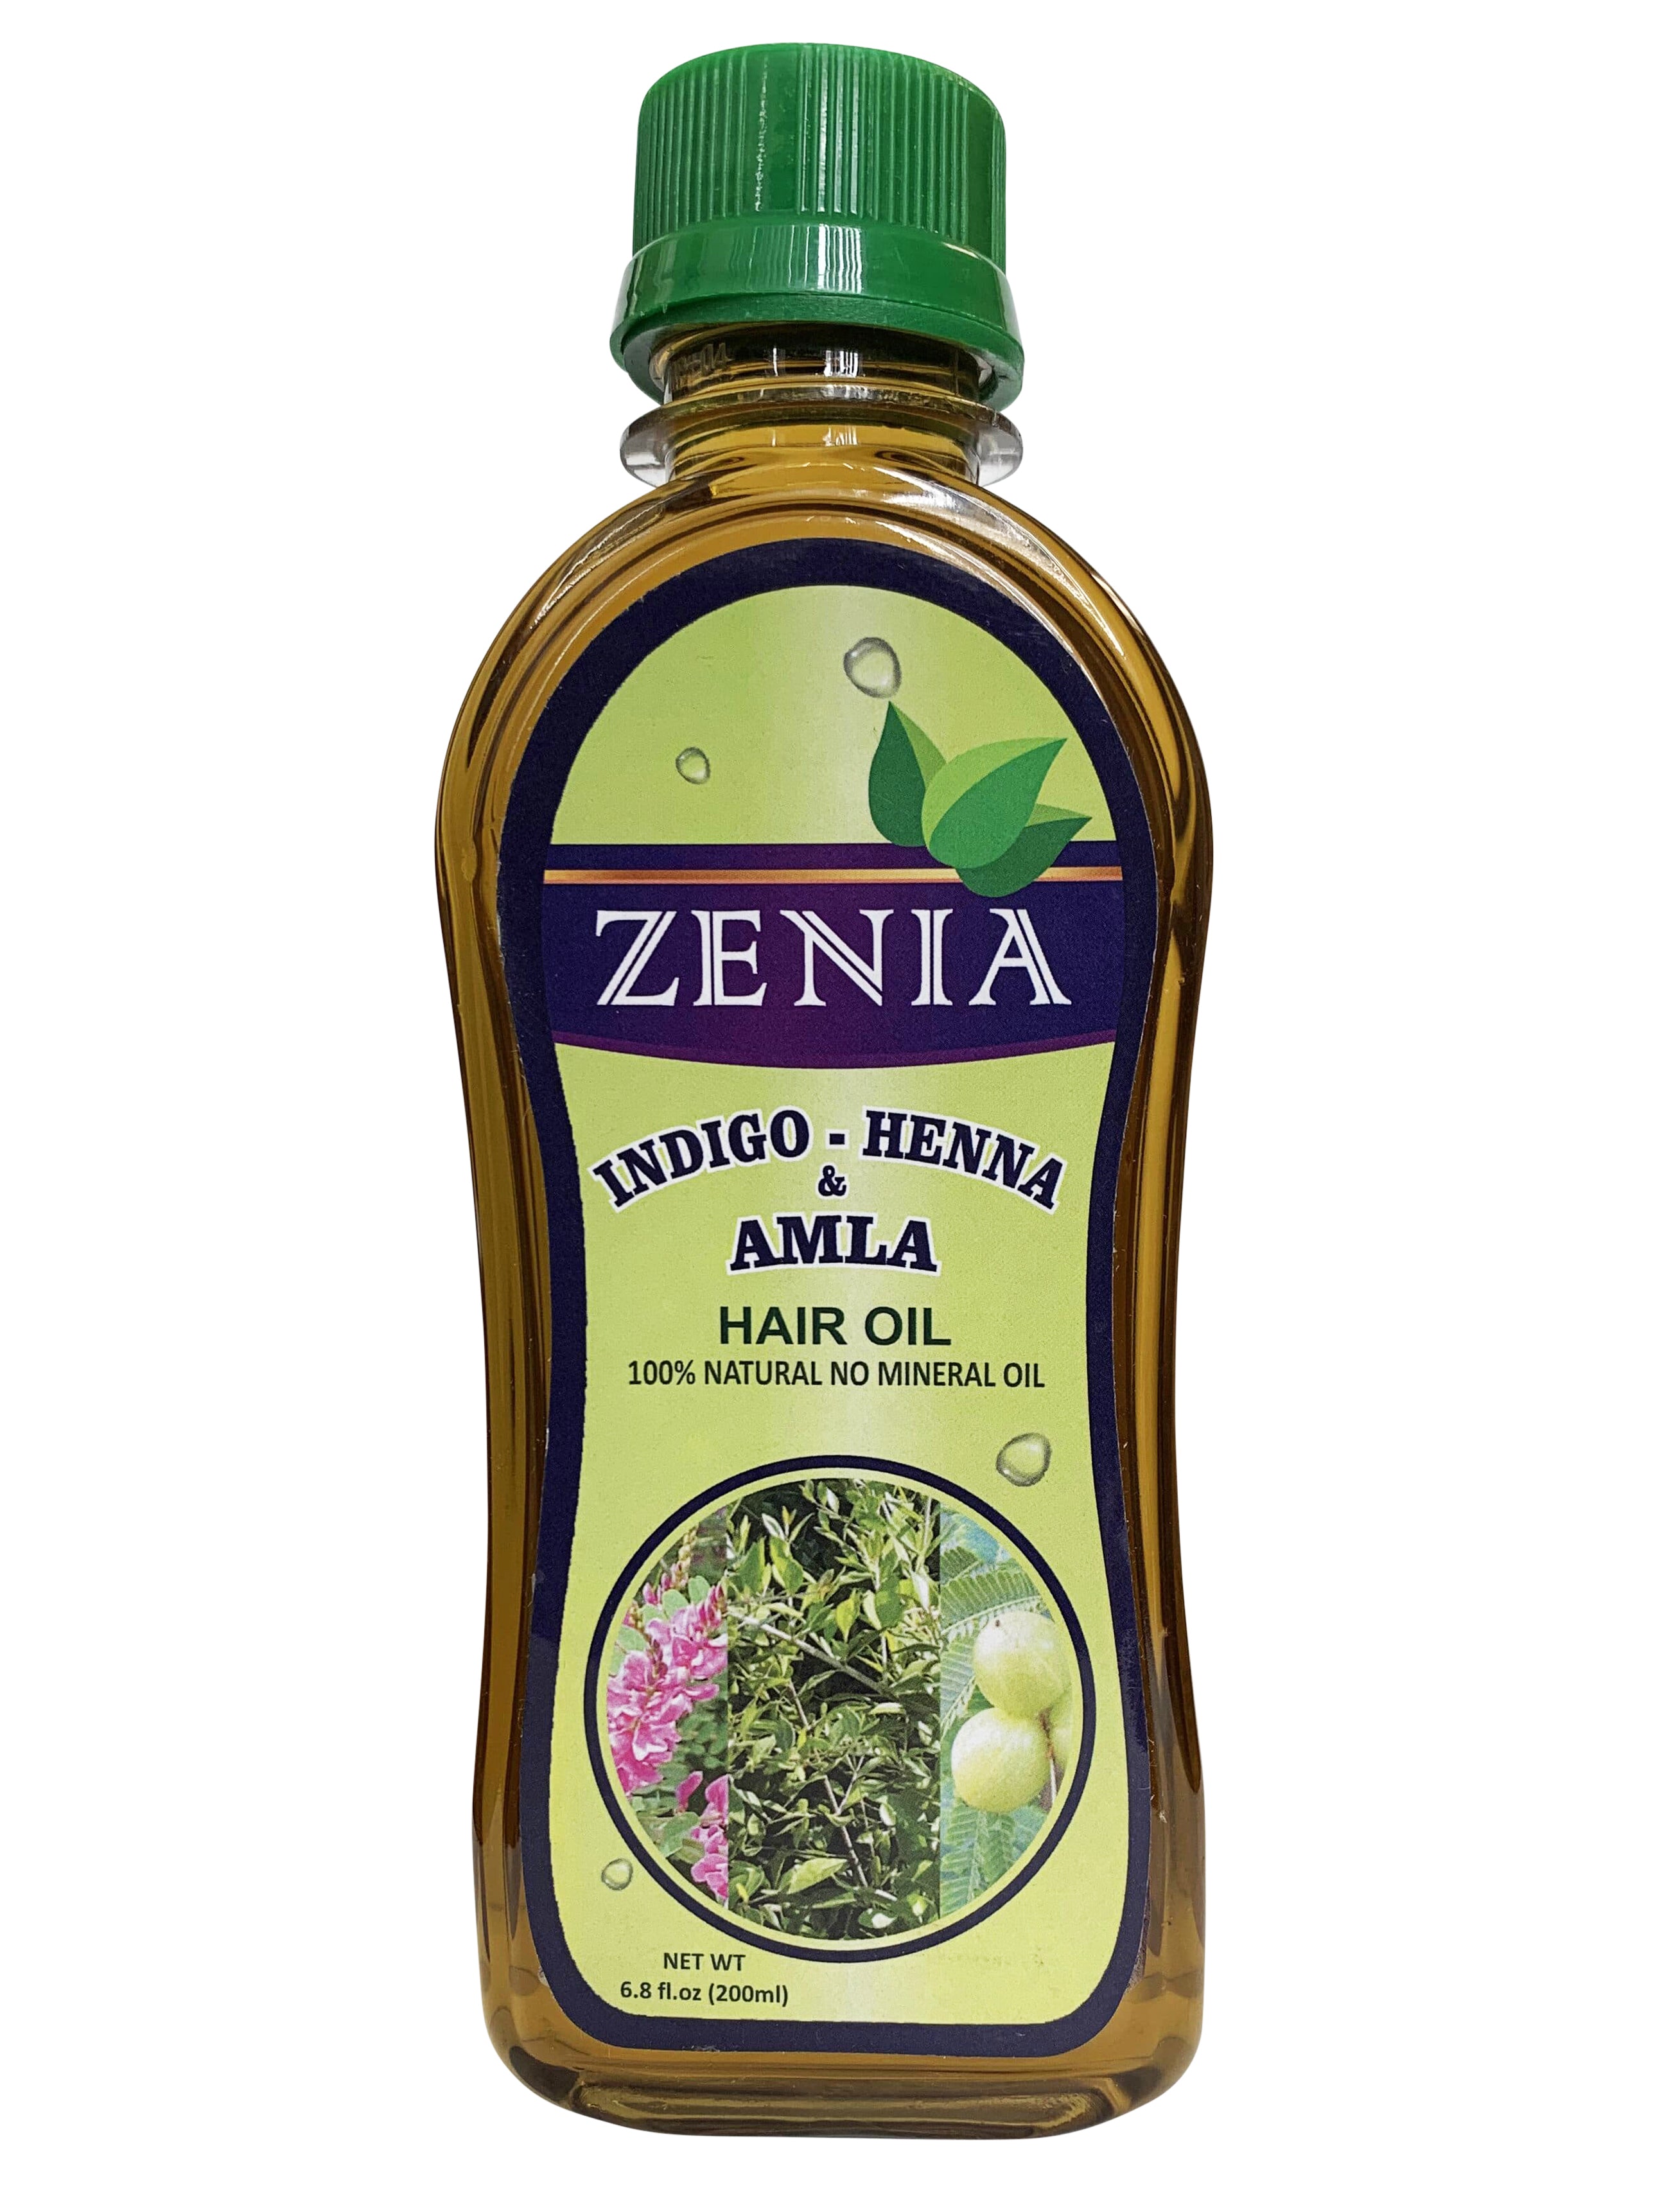 Zenia Indigo Henna Amla Hair Oil 100% Natural No Mineral Oil 200ml